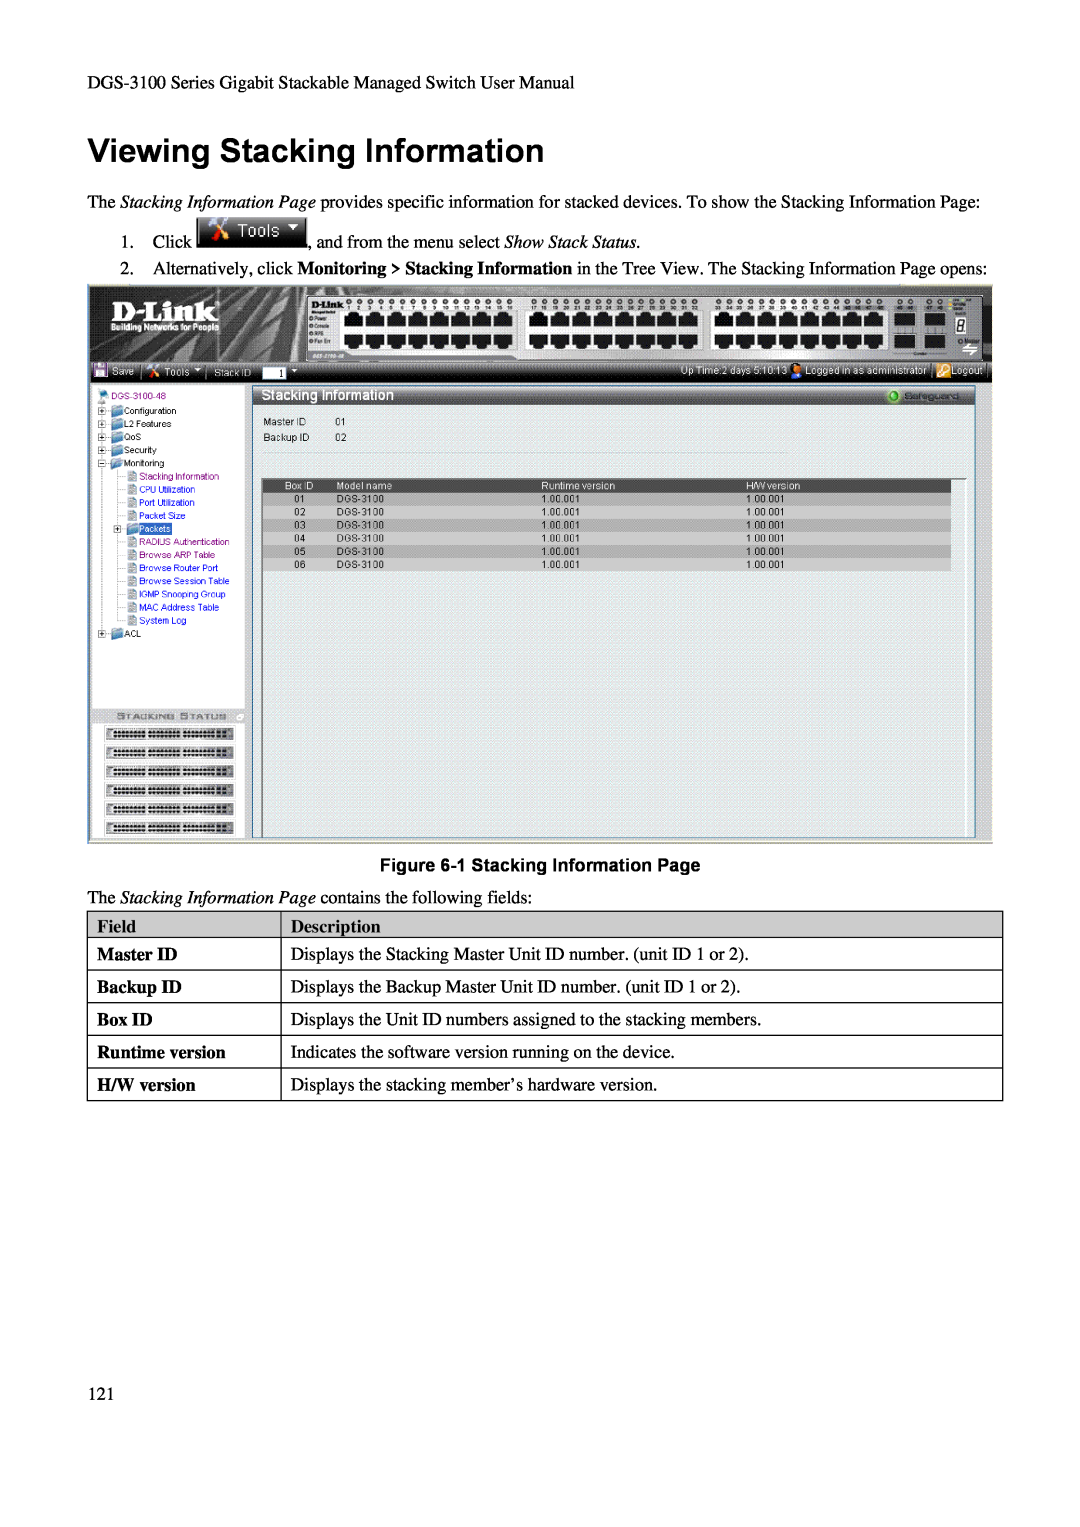 D-Link DGS-3100 user manual Viewing Stacking Information, 1 Stacking Information Page, Description 